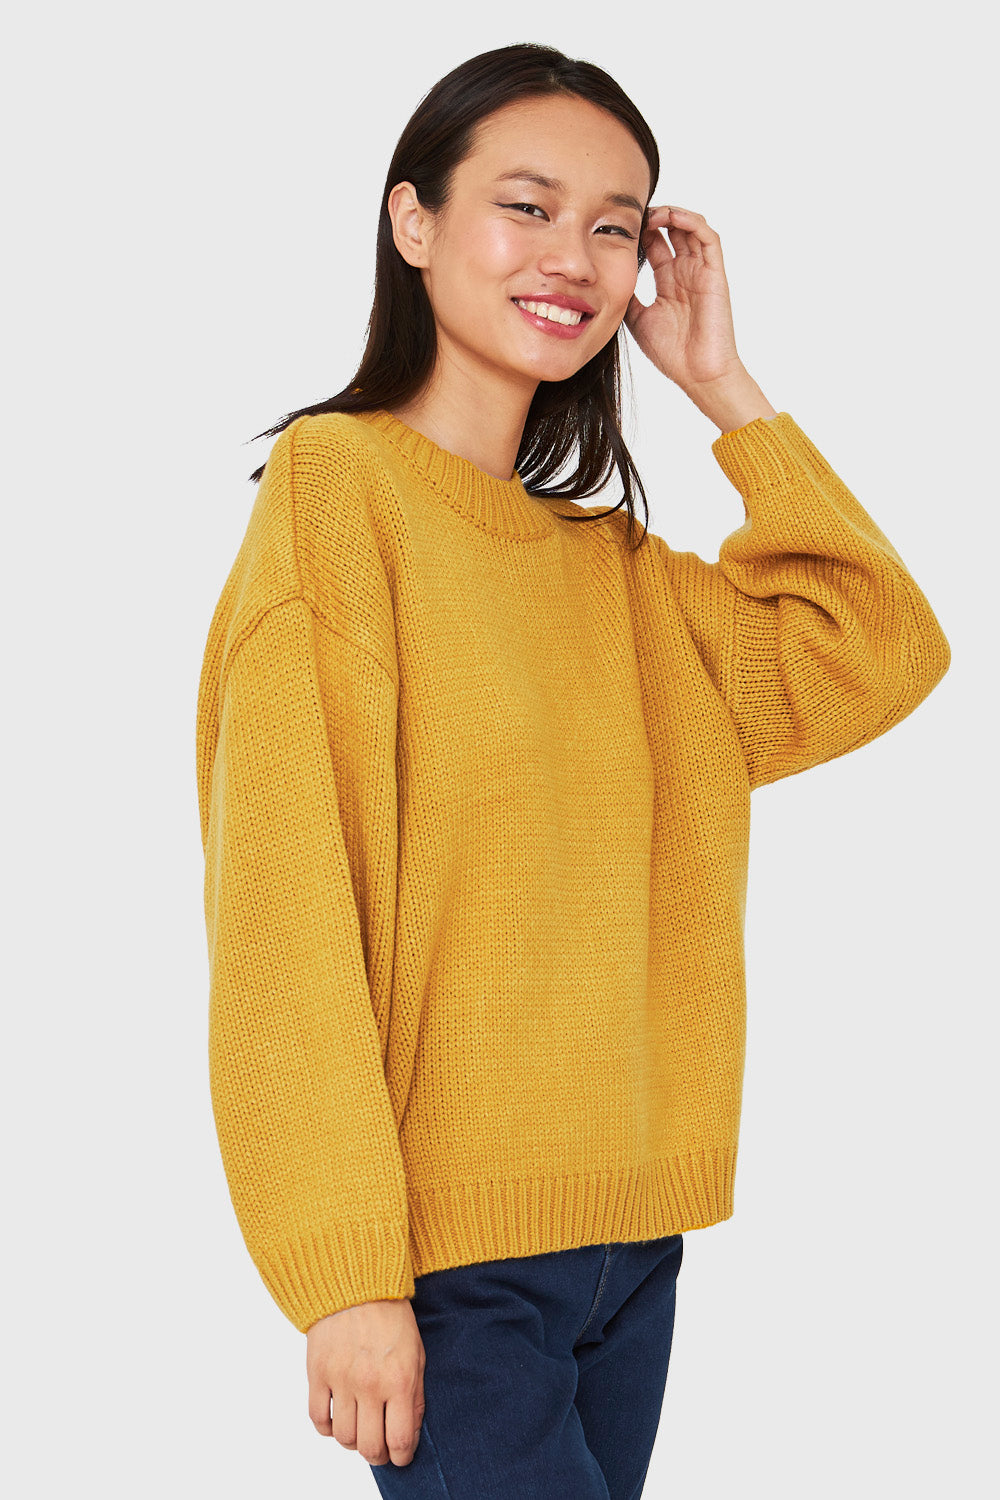 Sweater Básico Holgado Mostaza